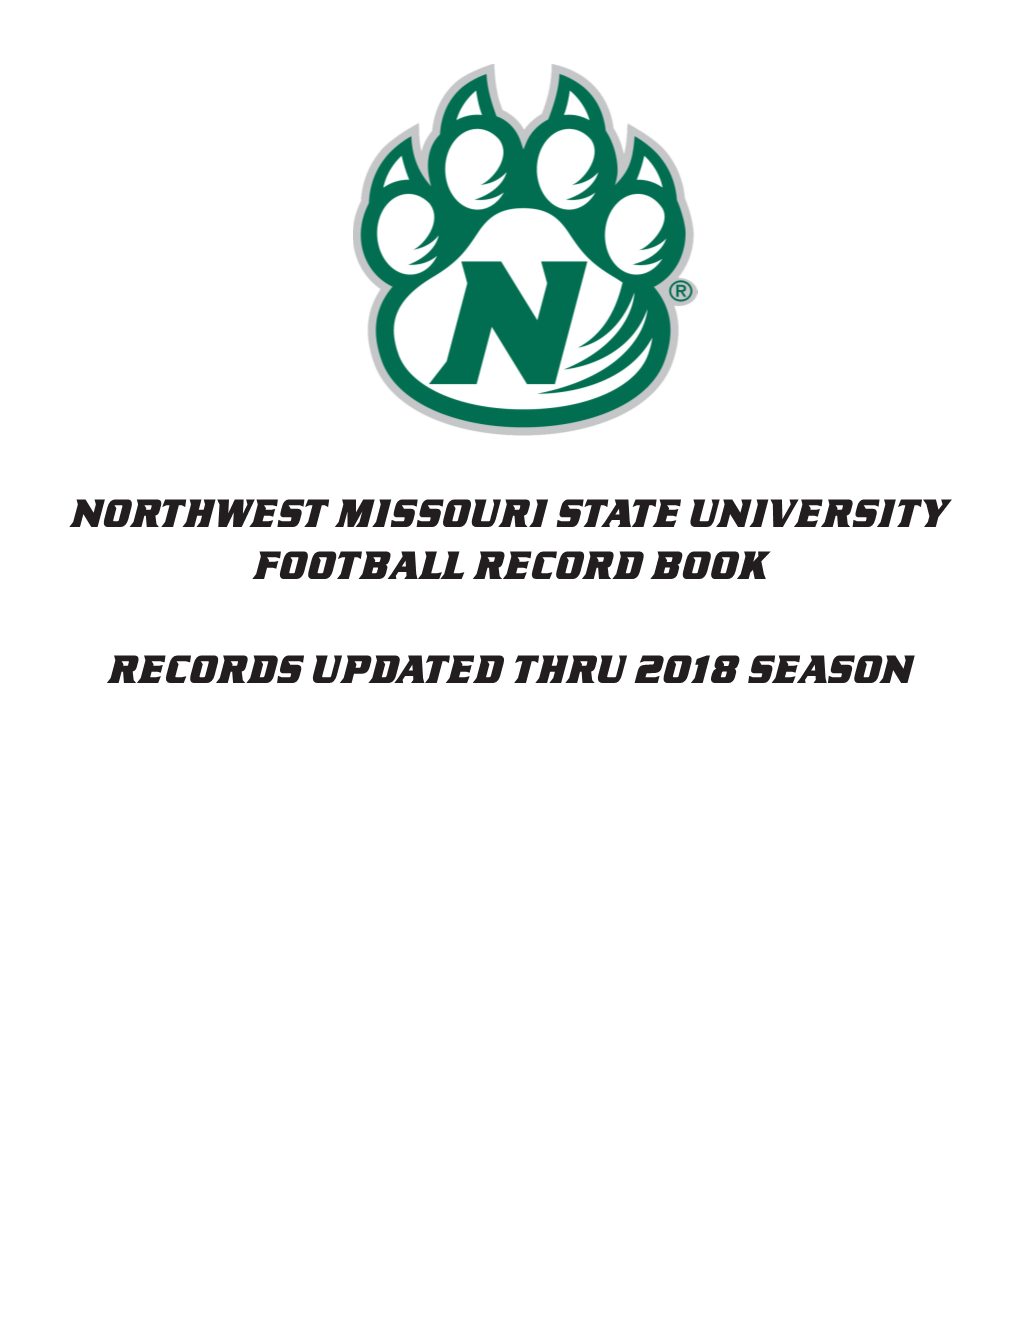 Northwest Missouri State University Football Record Book